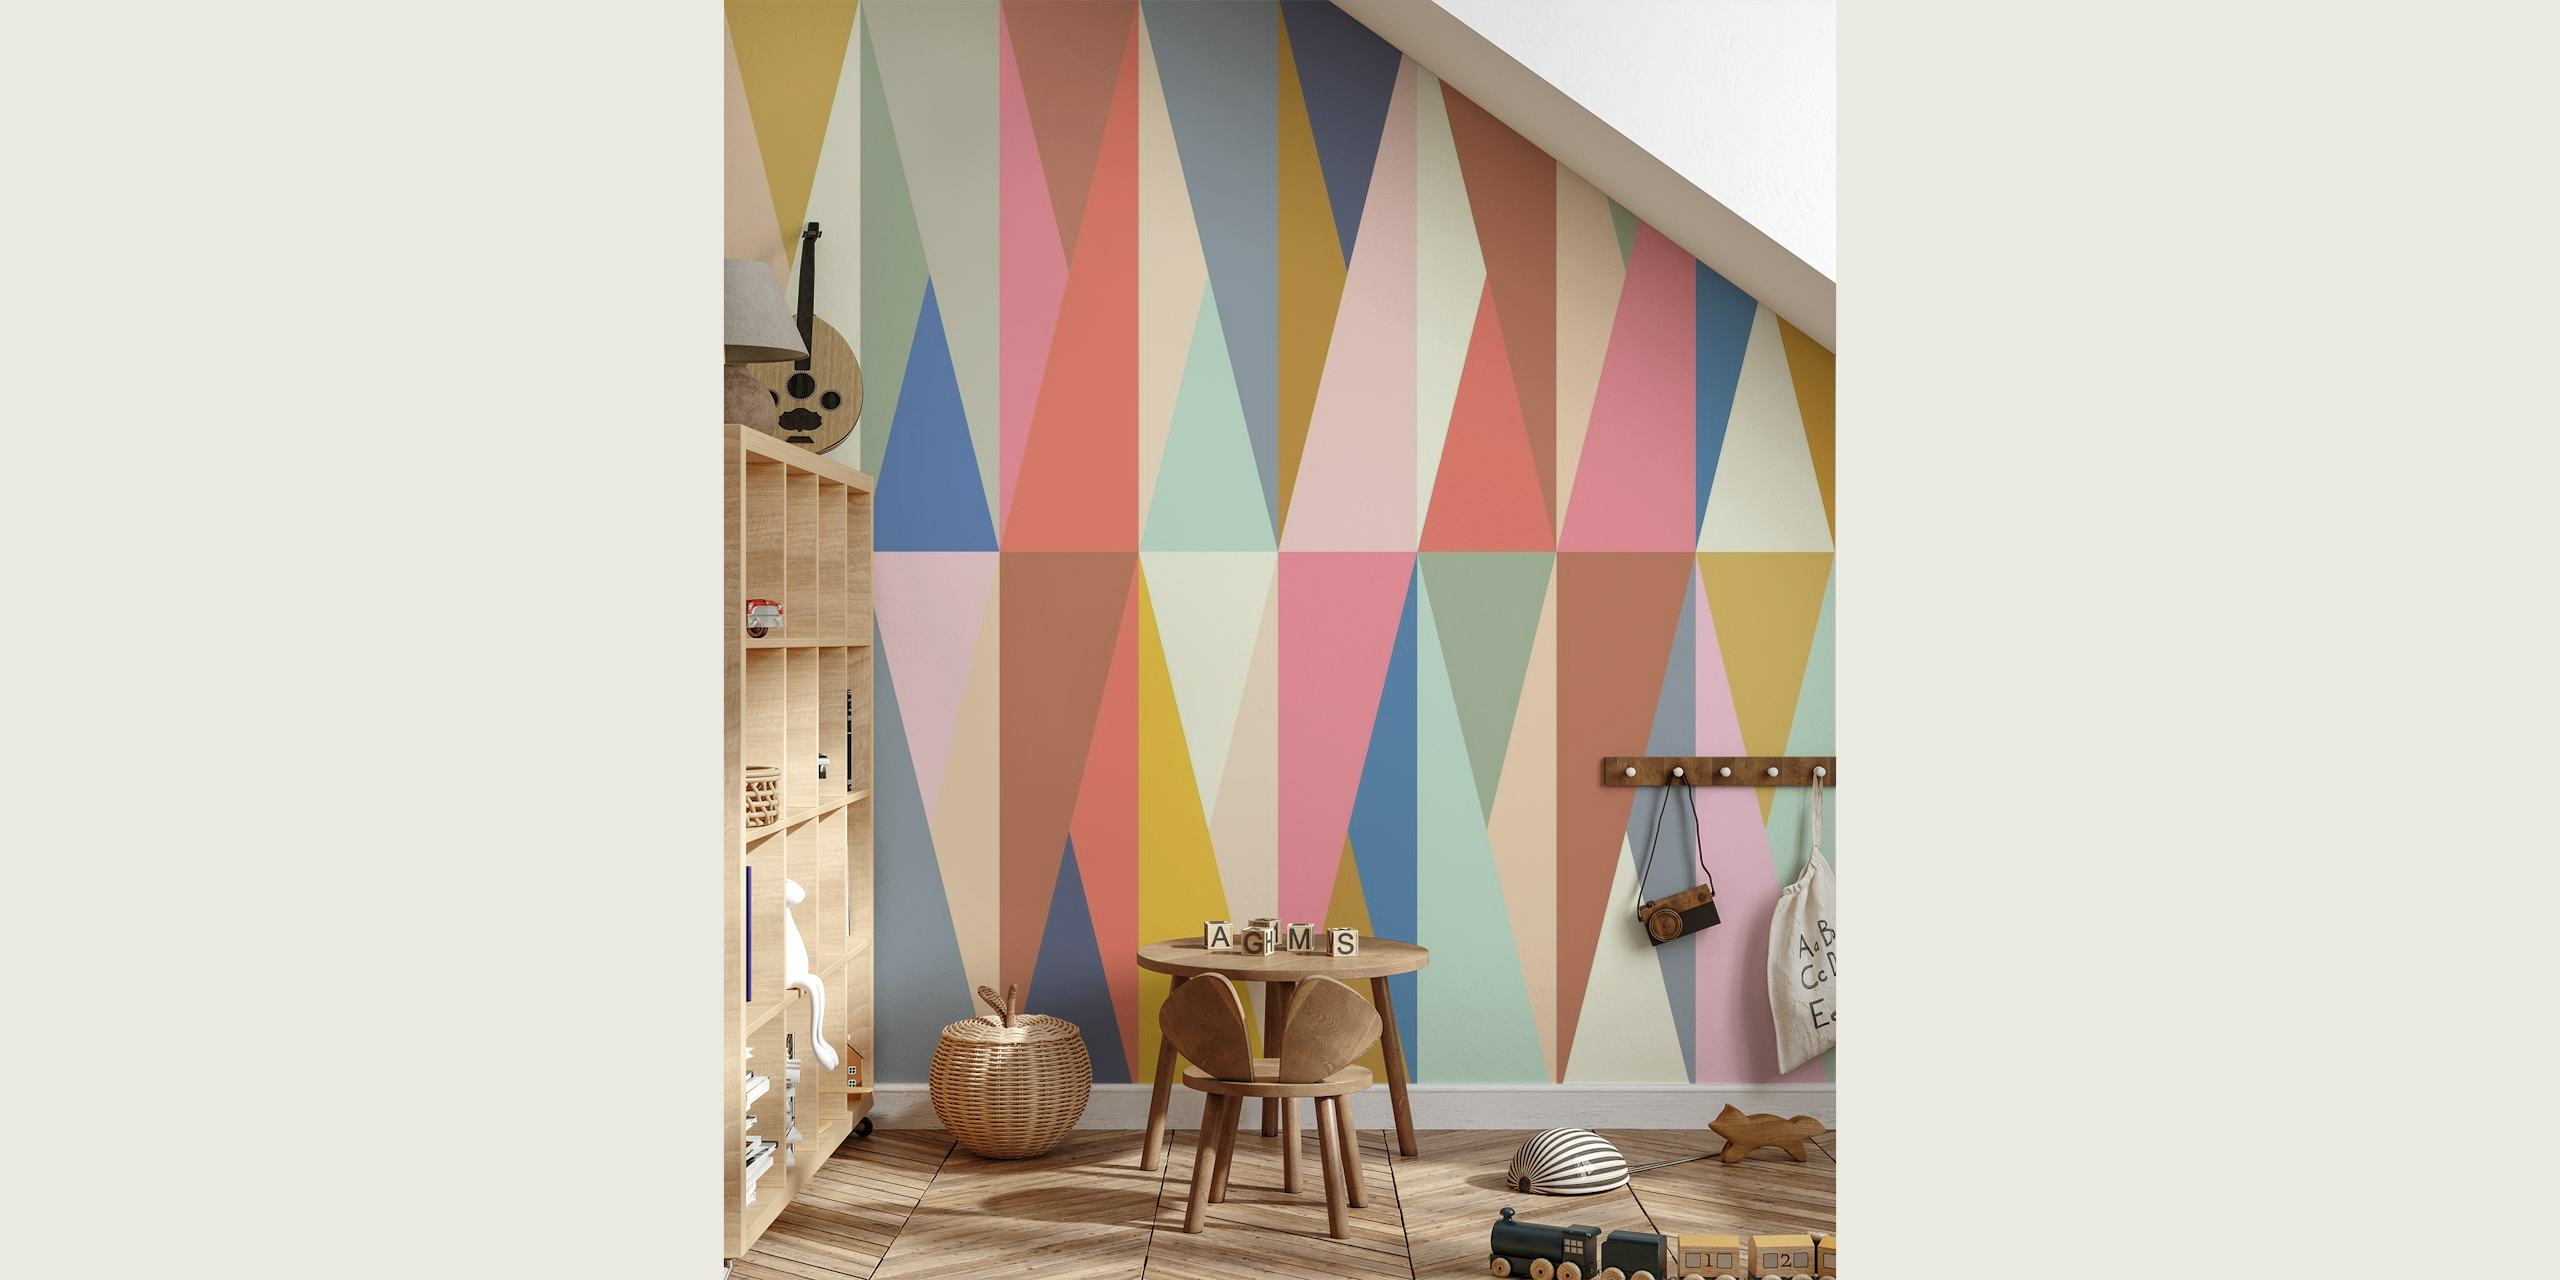 Eklektisk geometrisk trekantmønster vægmaleri i bløde nuancer